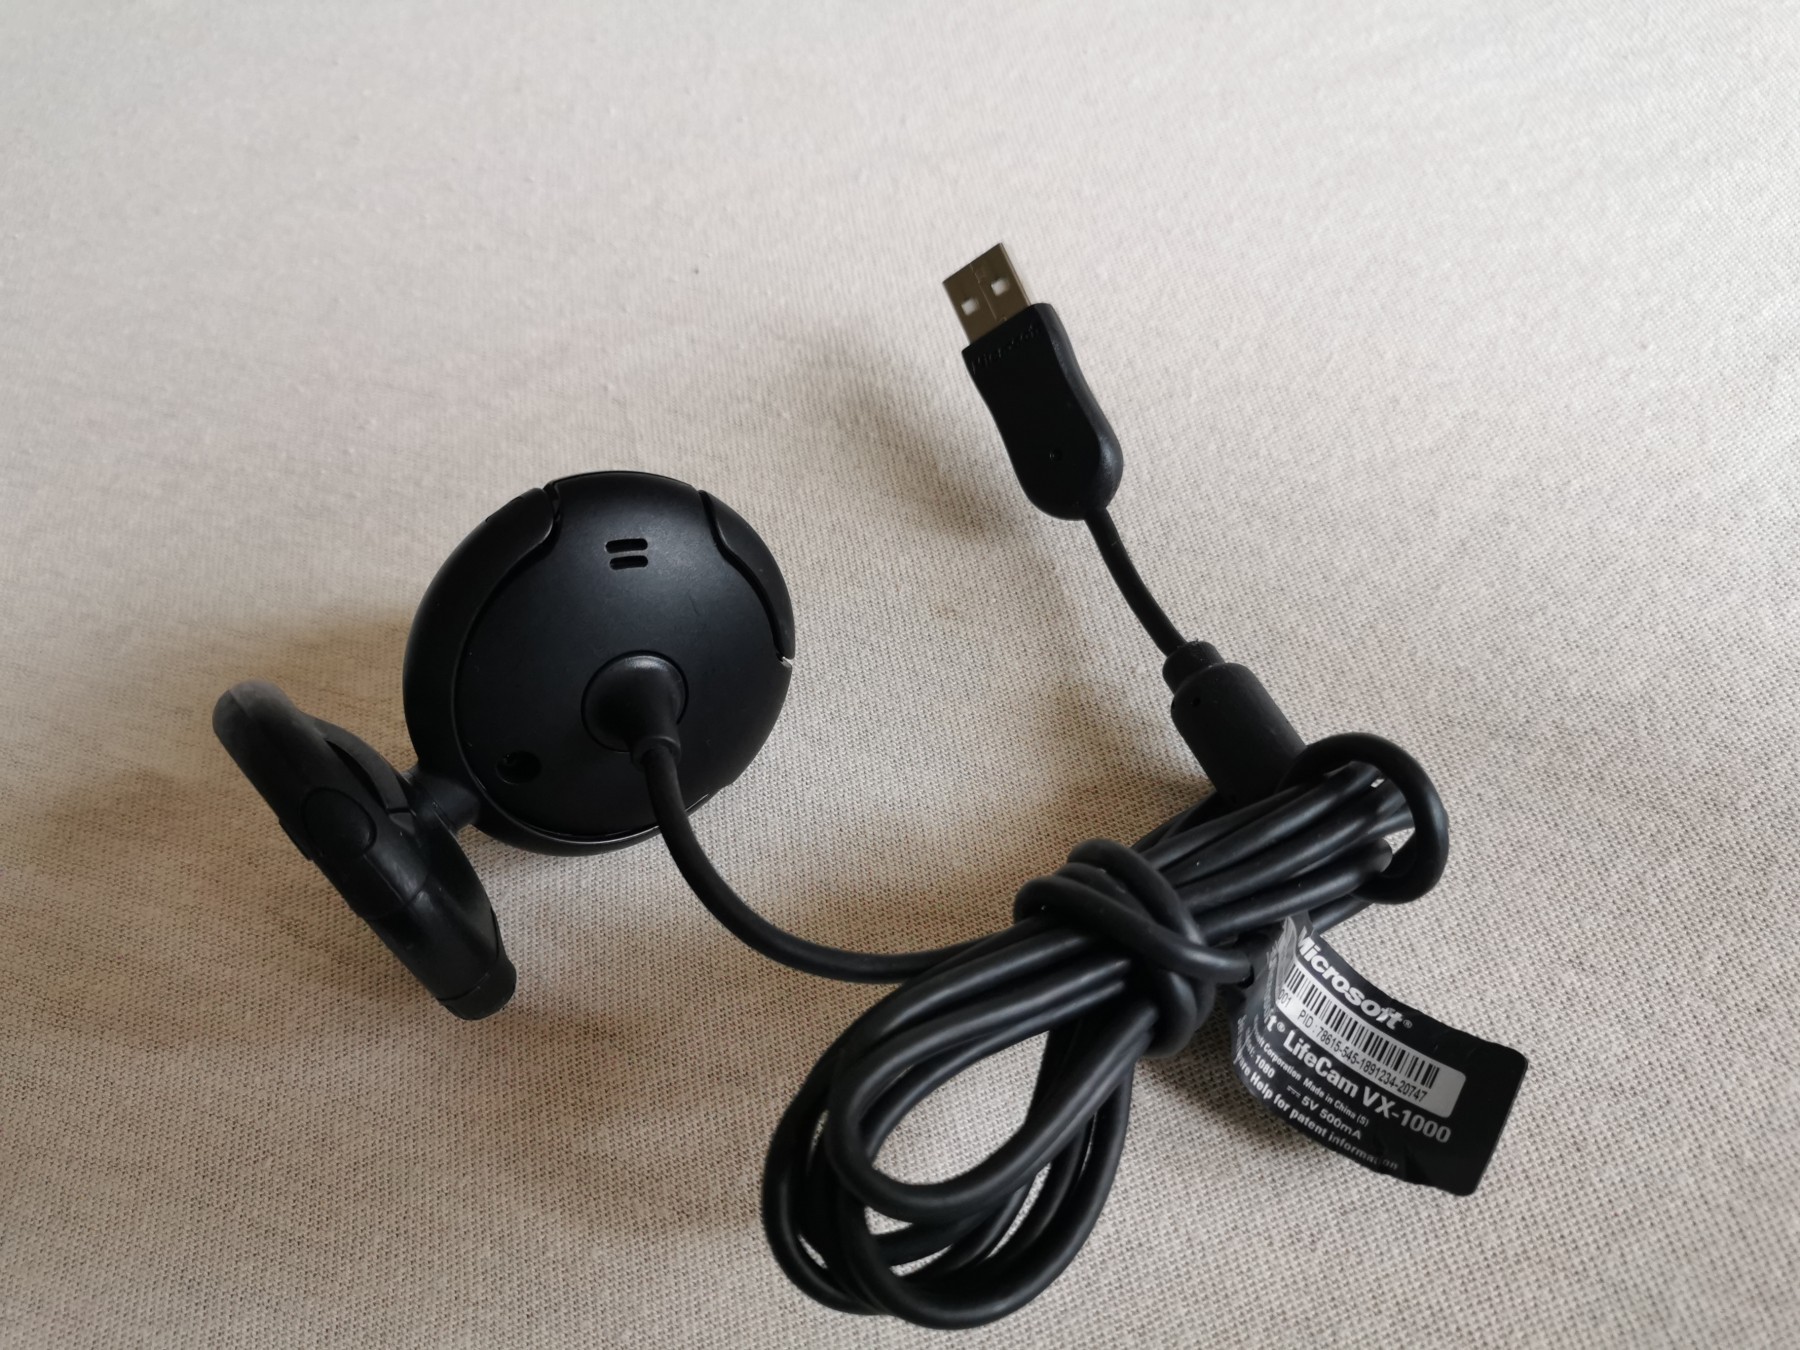 USB WEB kamera Microsoft LifeCam VX-1000 Camera - Kupindo.com (65794409)